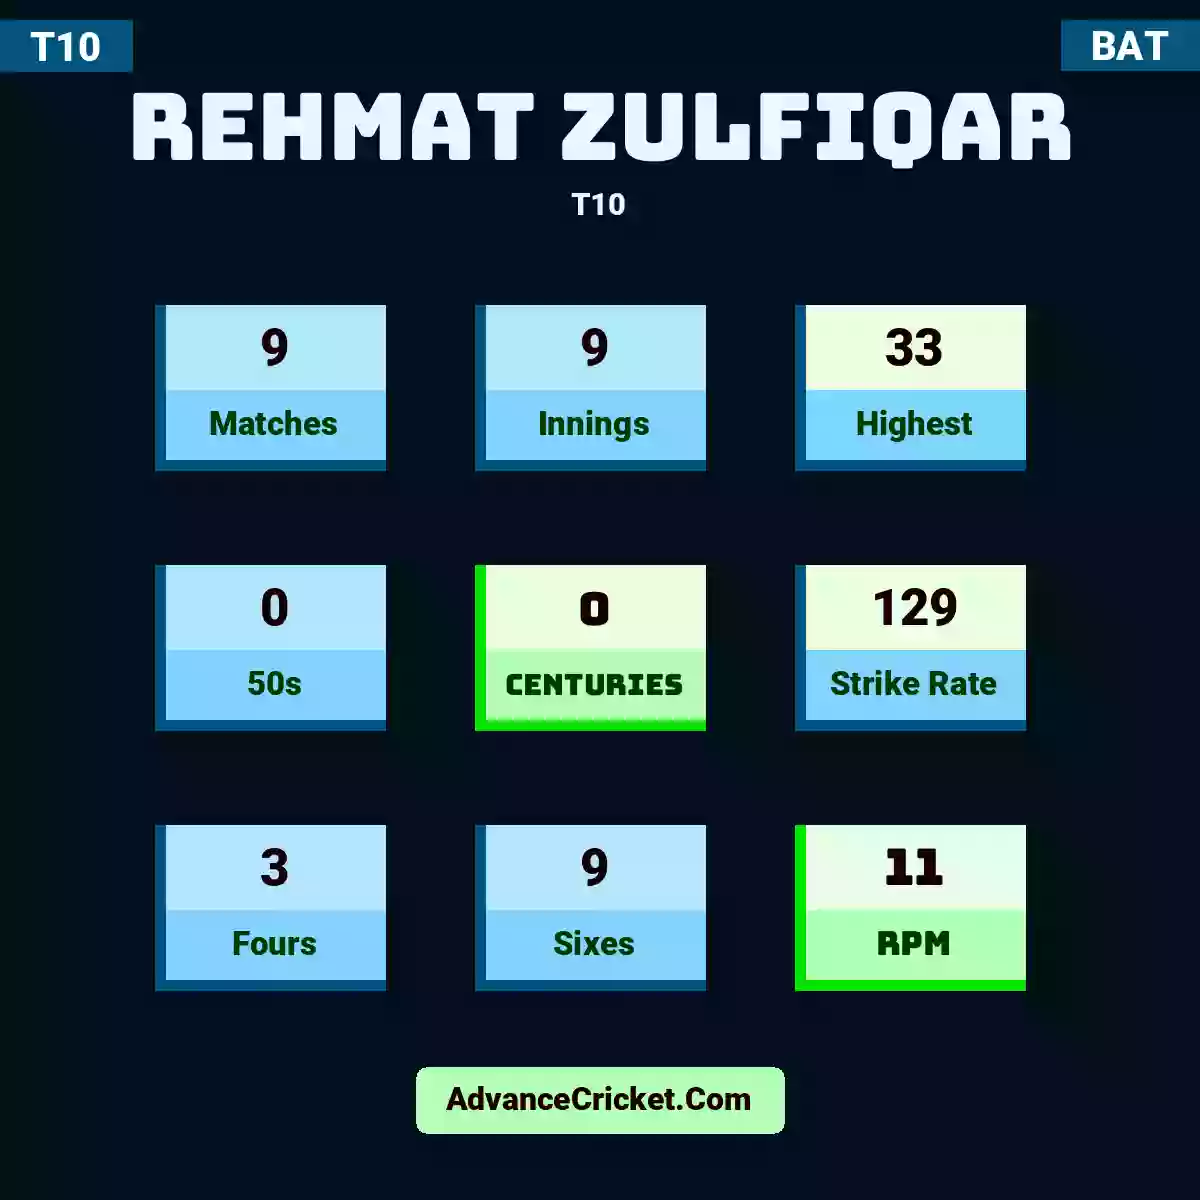 Rehmat Zulfiqar T10 , Rehmat Zulfiqar played 9 matches, scored 33 runs as highest, 0 half-centuries, and 0 centuries, with a strike rate of 129. R.Zulfiqar hit 3 fours and 9 sixes, with an RPM of 11.